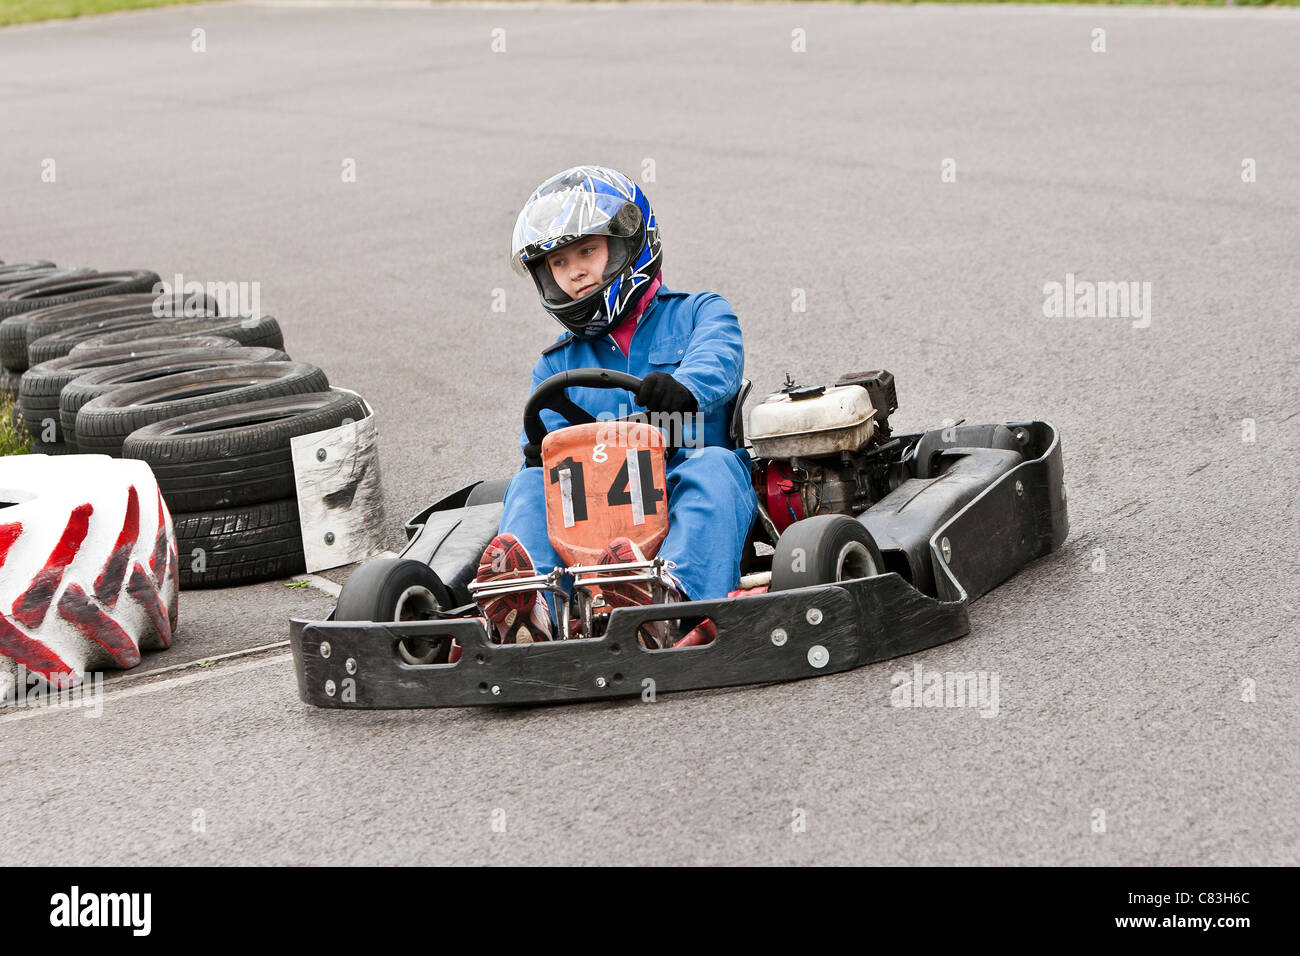 children racing go-carts on track Stock Photo